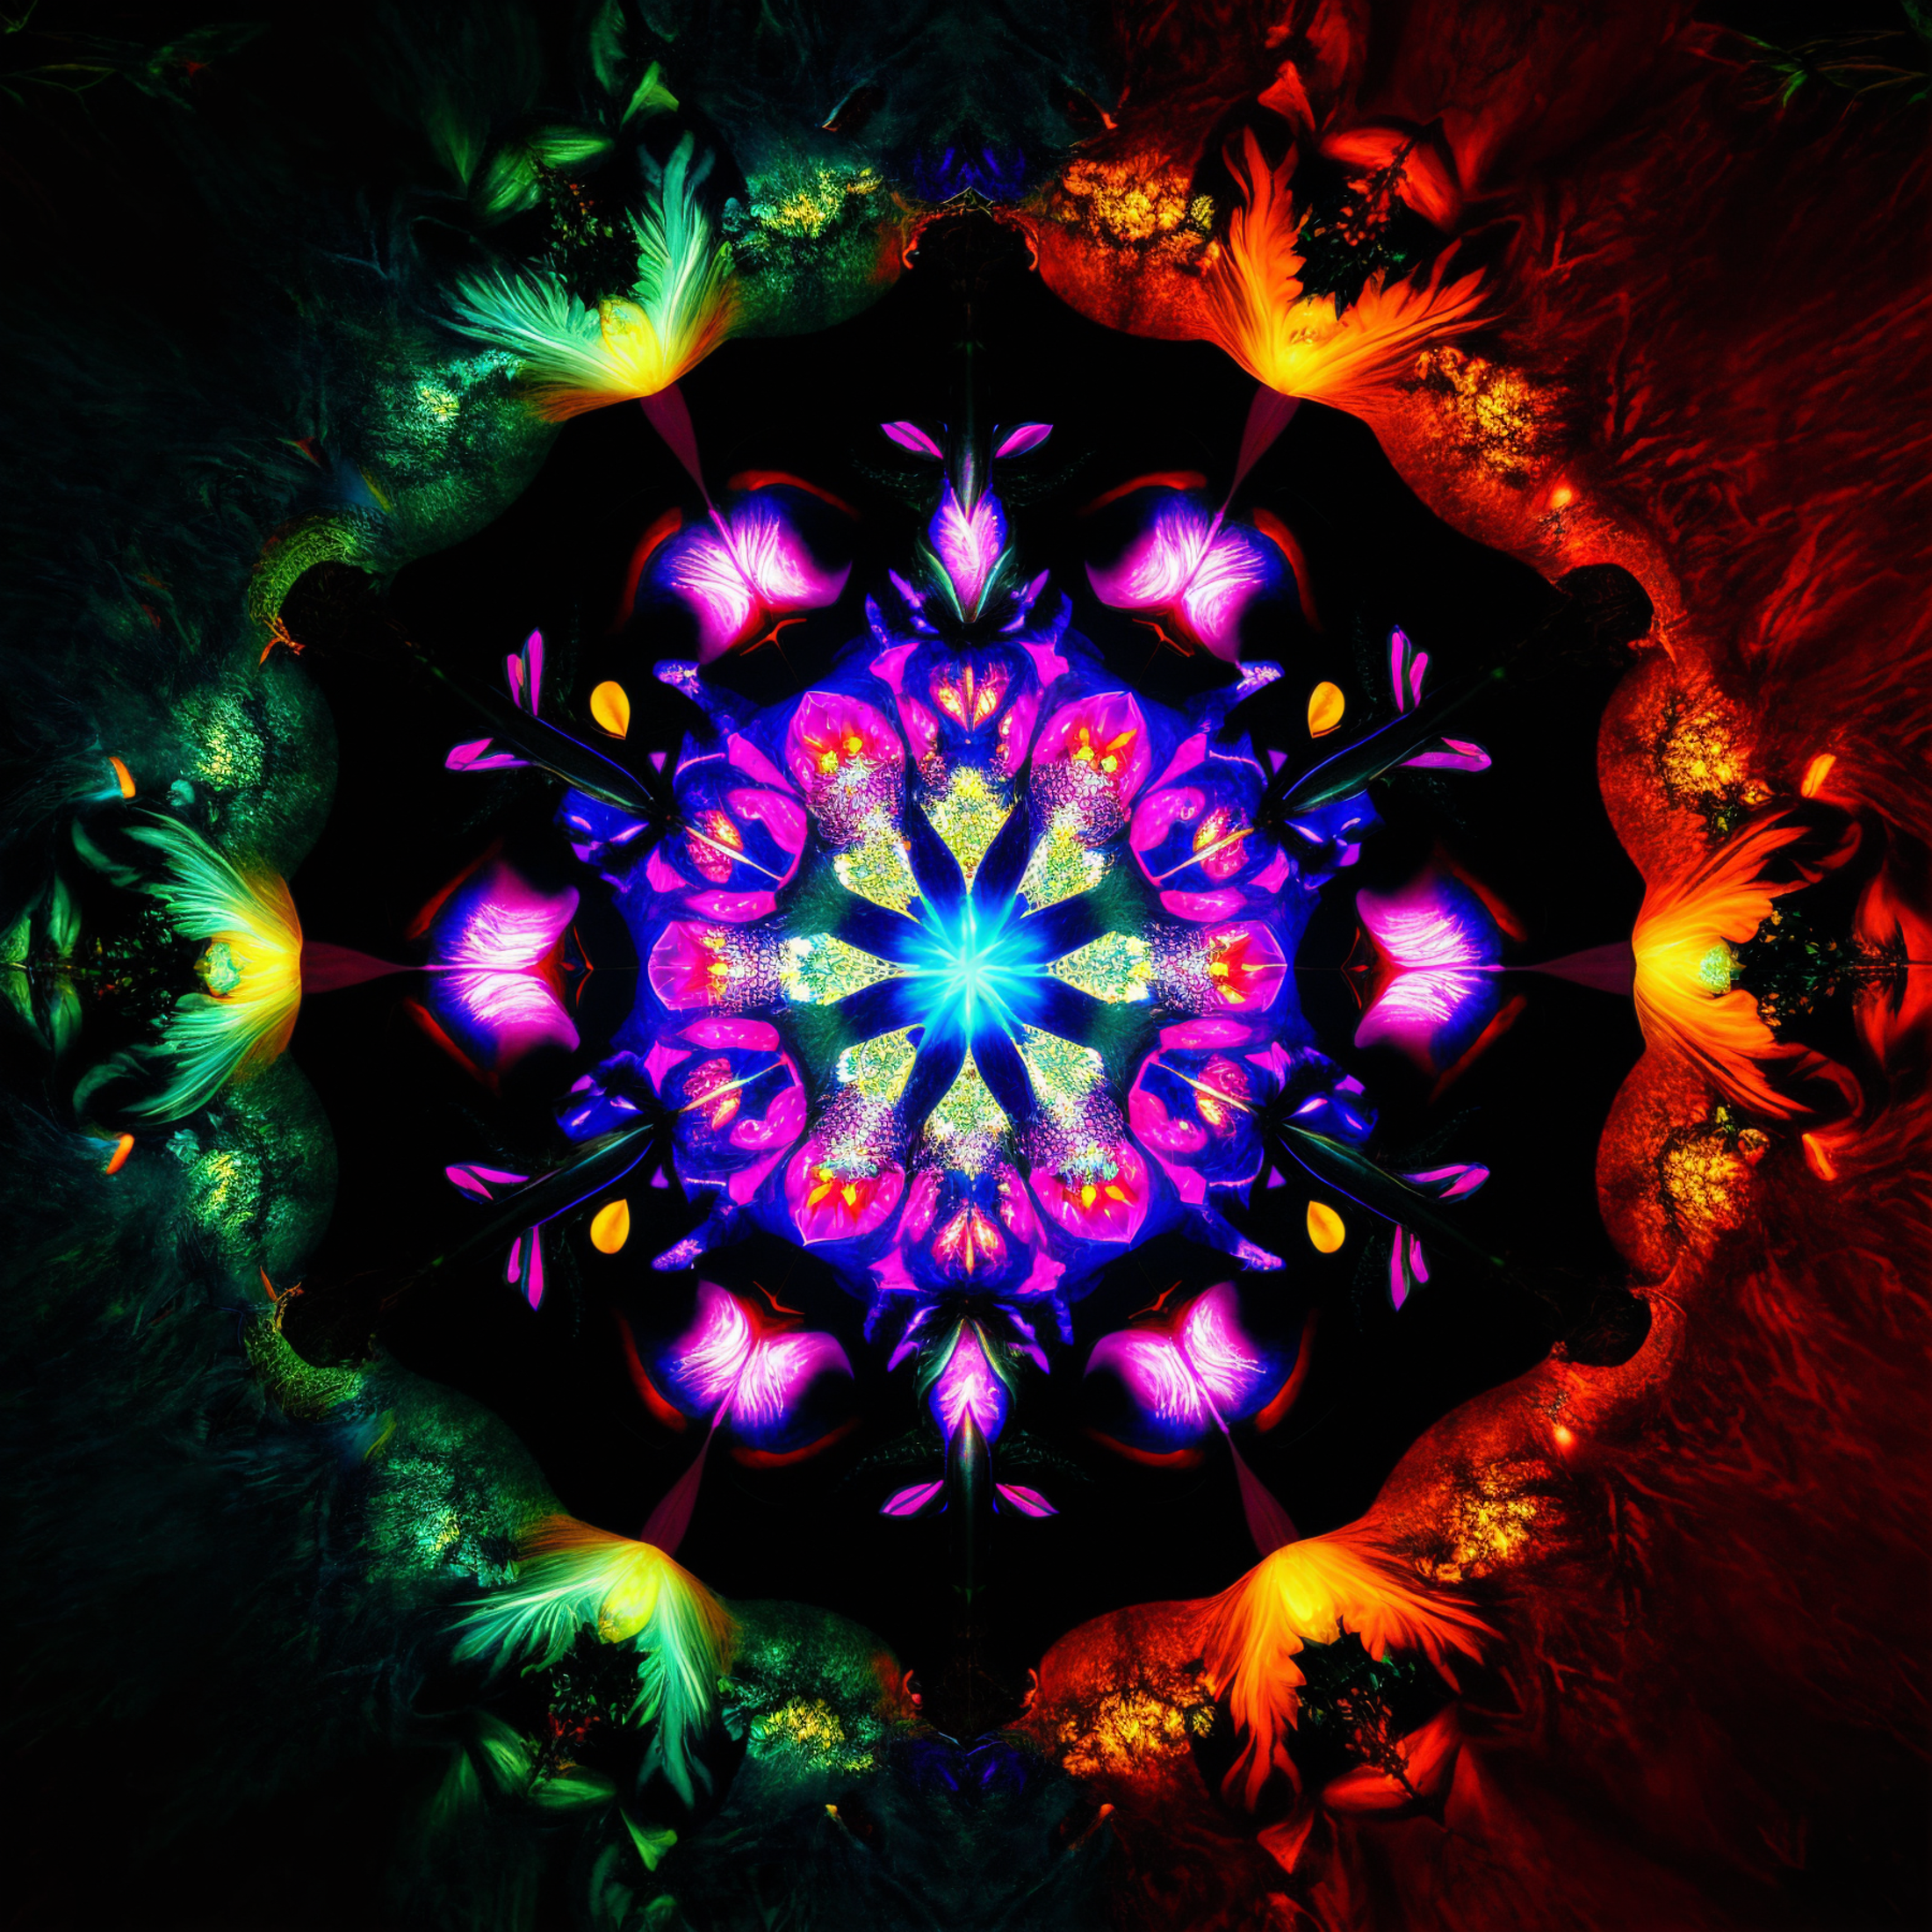 Kaleidoscope image by alexds9